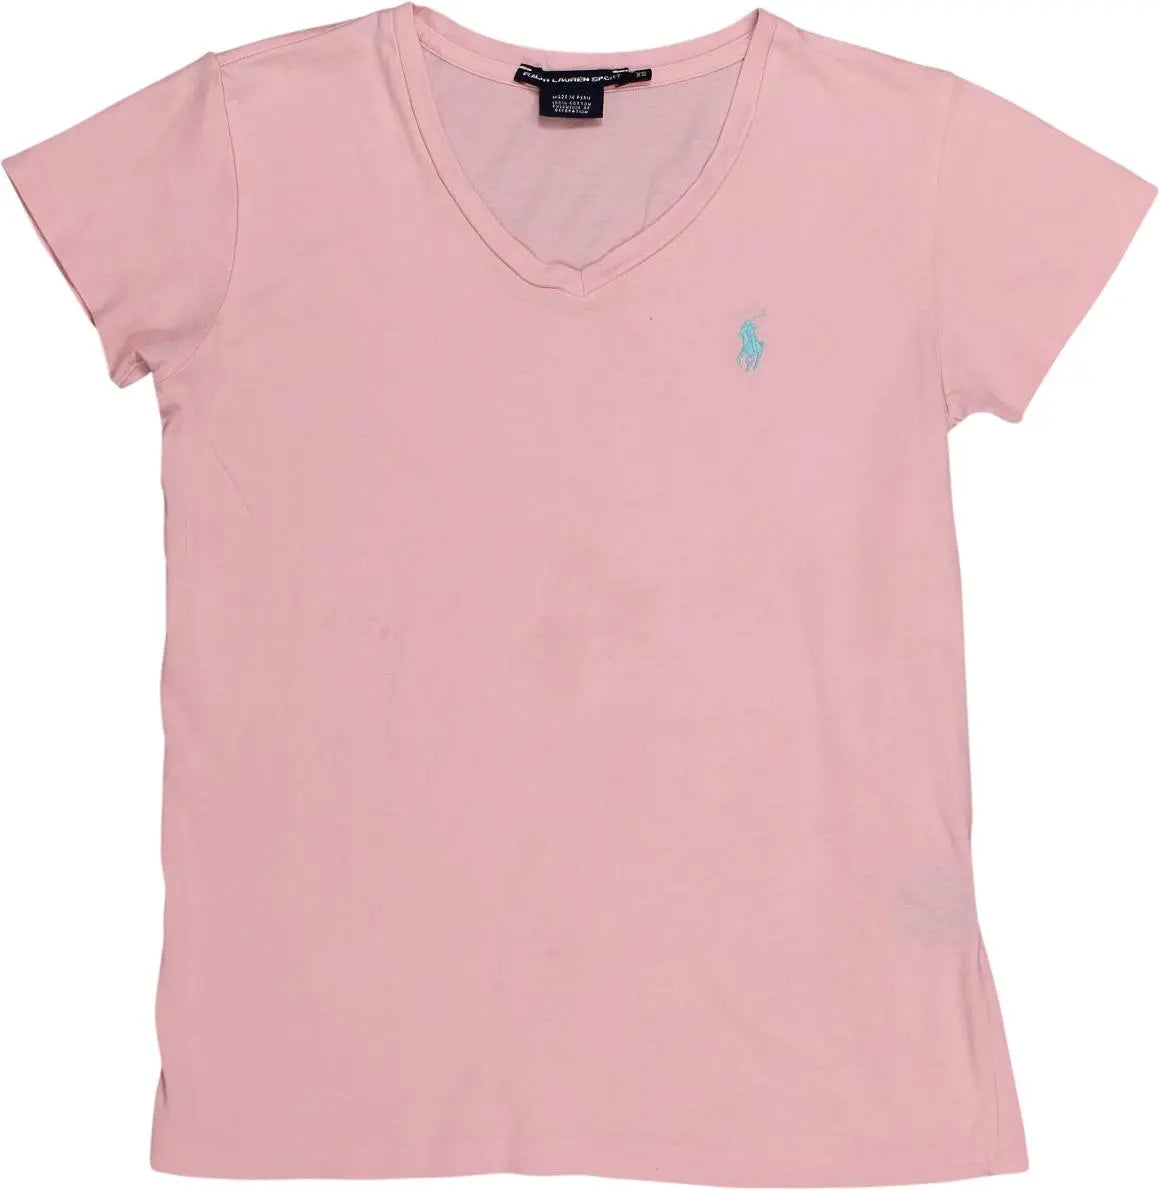 Ralph Lauren - Pink T-shirt by Ralph Lauren Sport- ThriftTale.com - Vintage and second handclothing